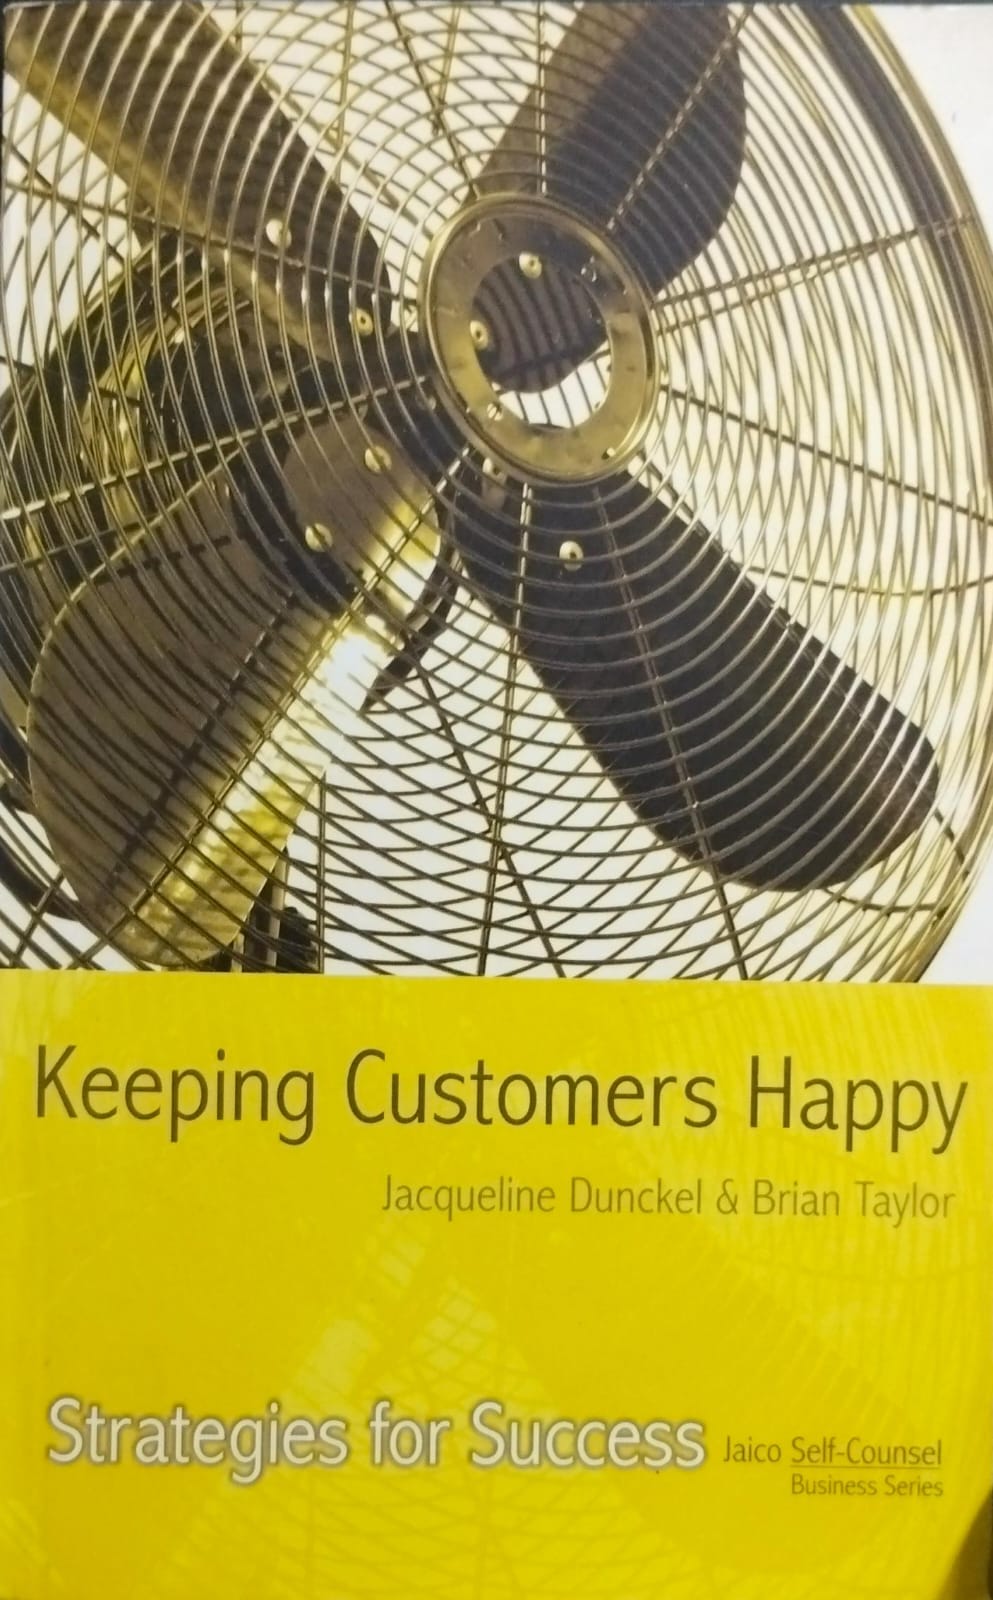 Keeping customers happy